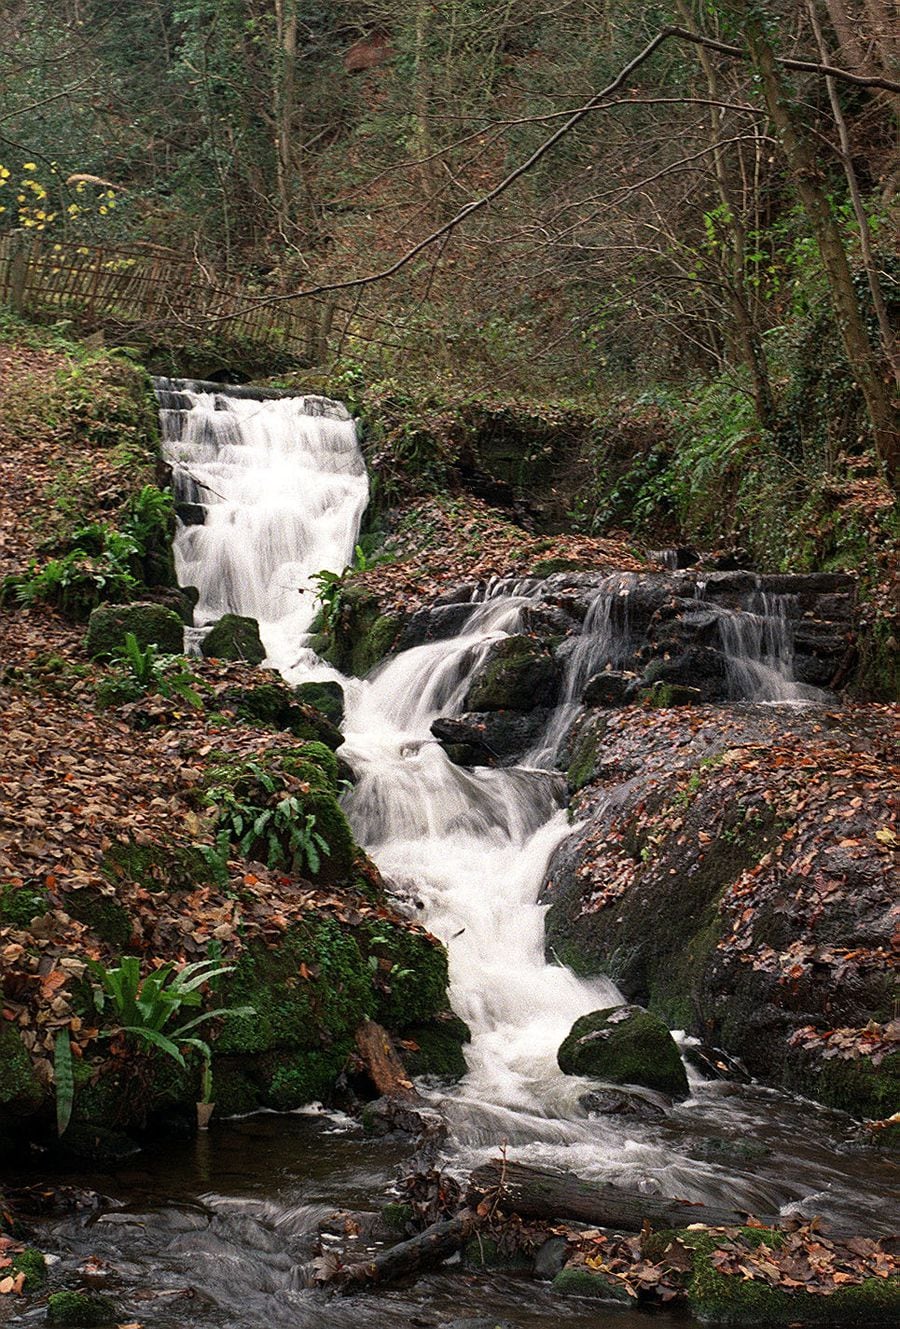 How a Shropshire village's secret beauty was blown open to visitors ...